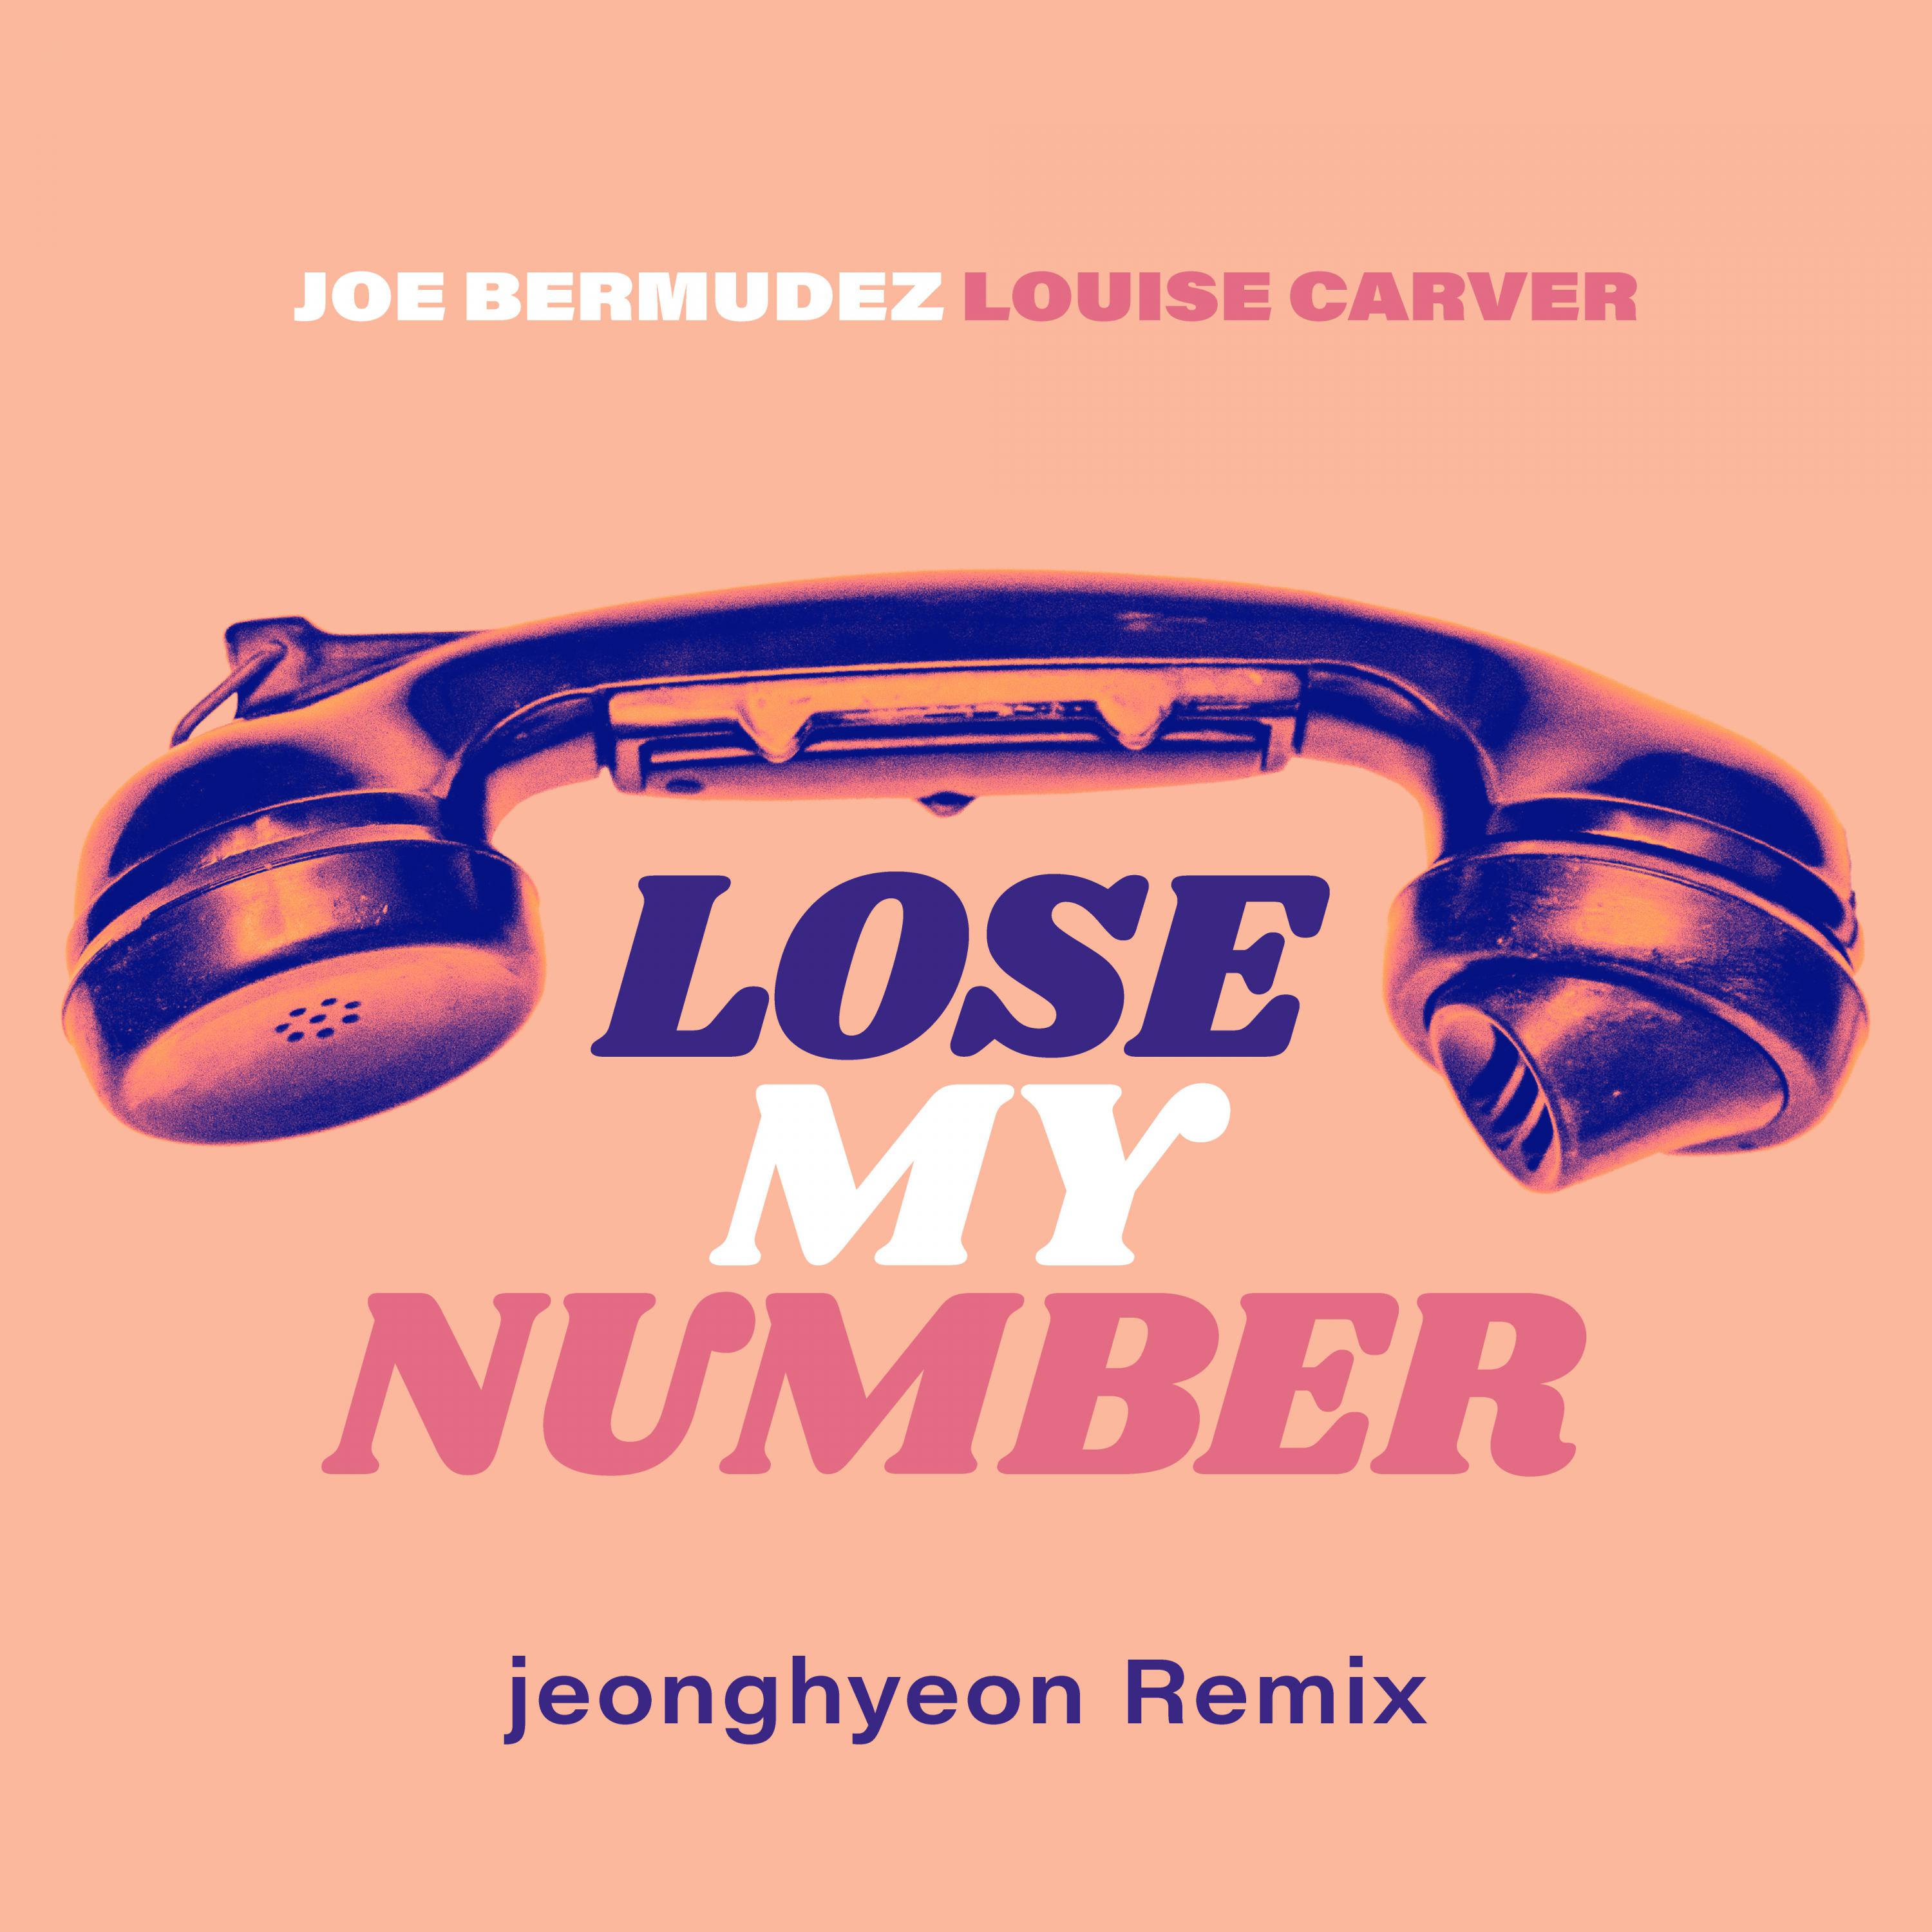 Joe Bermudez - Lose My Number (jeonghyeon Remix Instrumental)